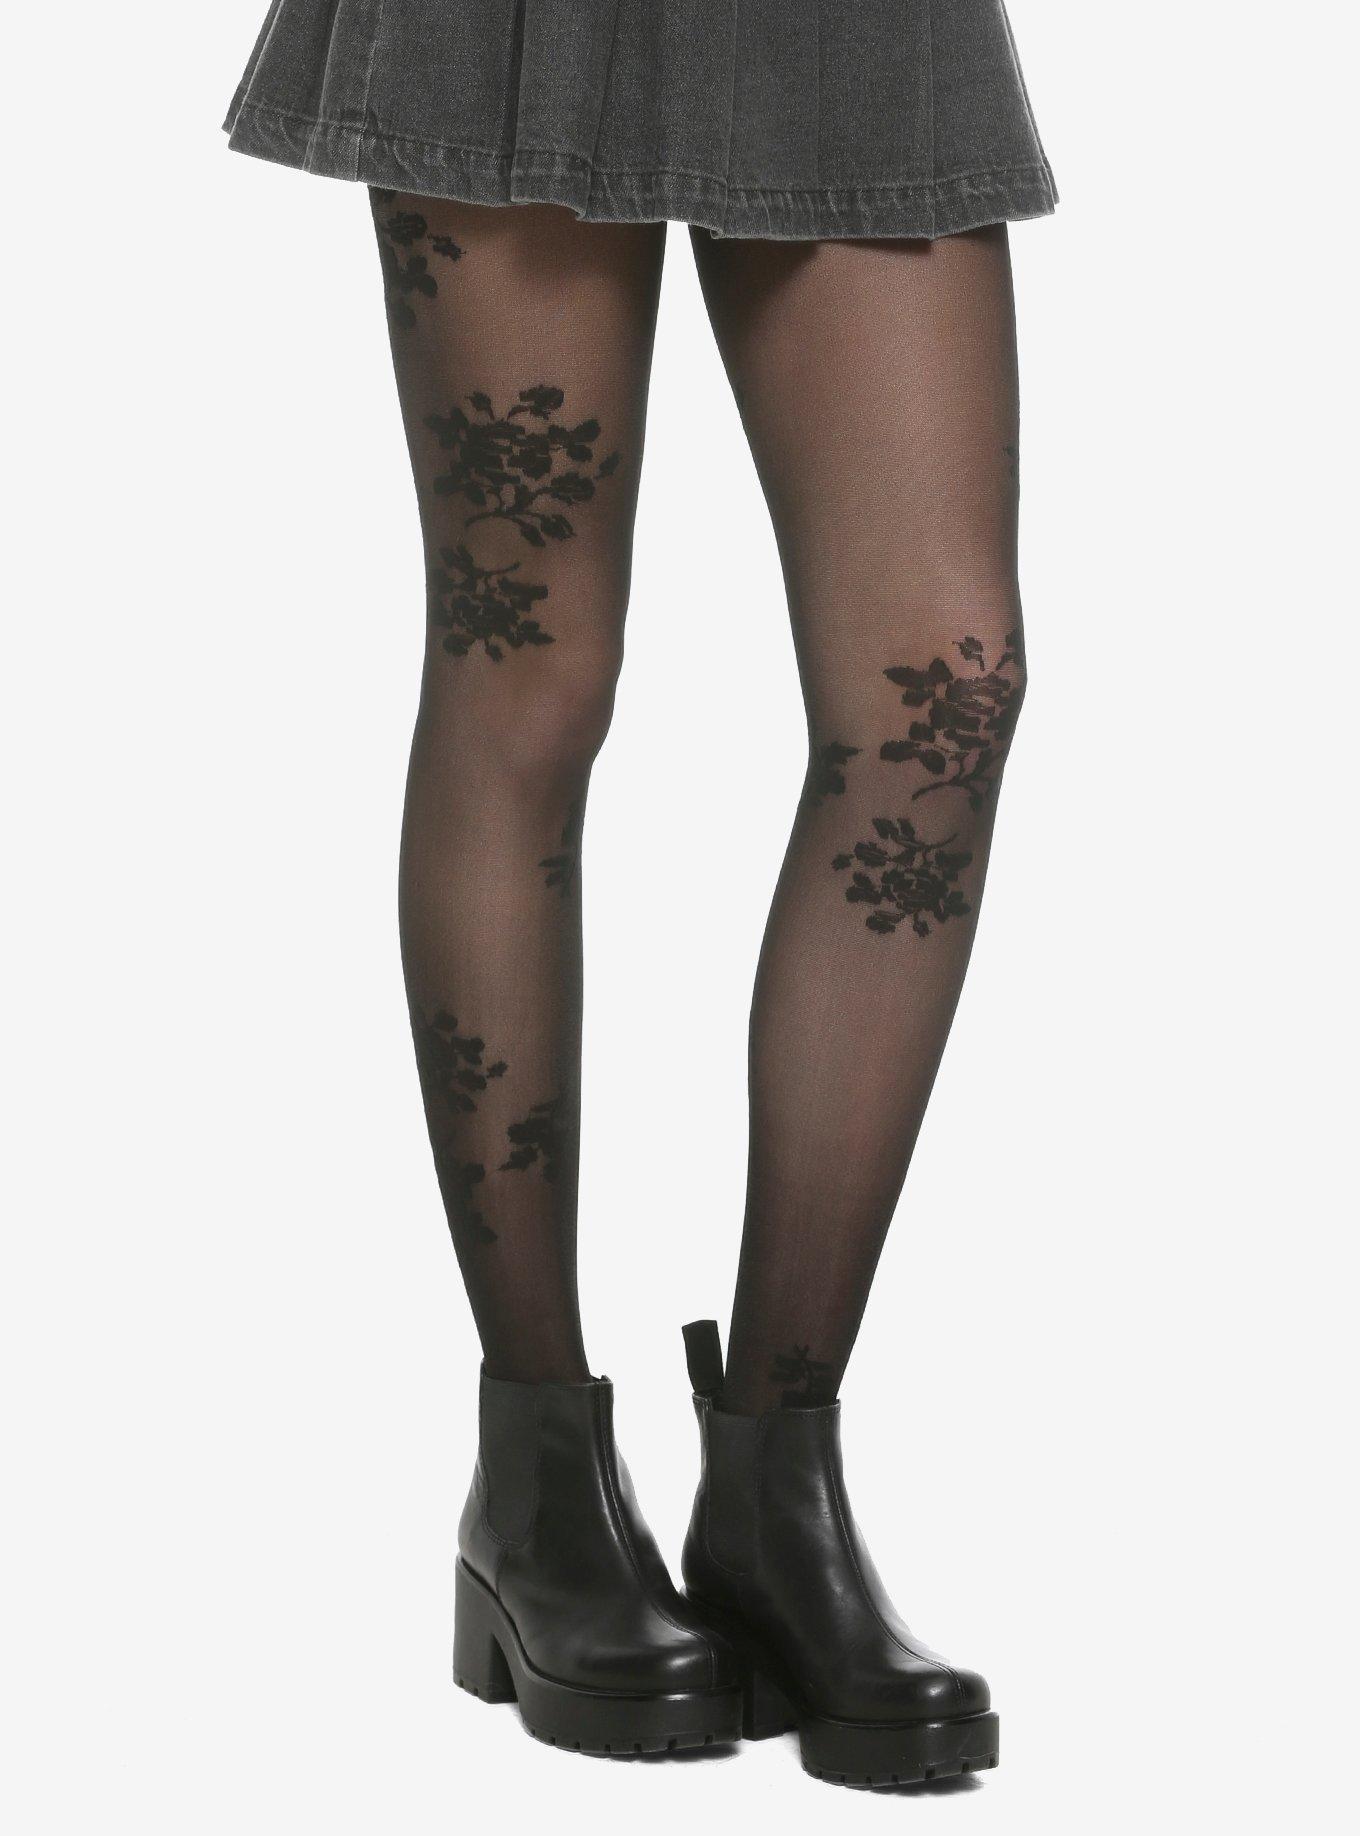 Black floral tights 1